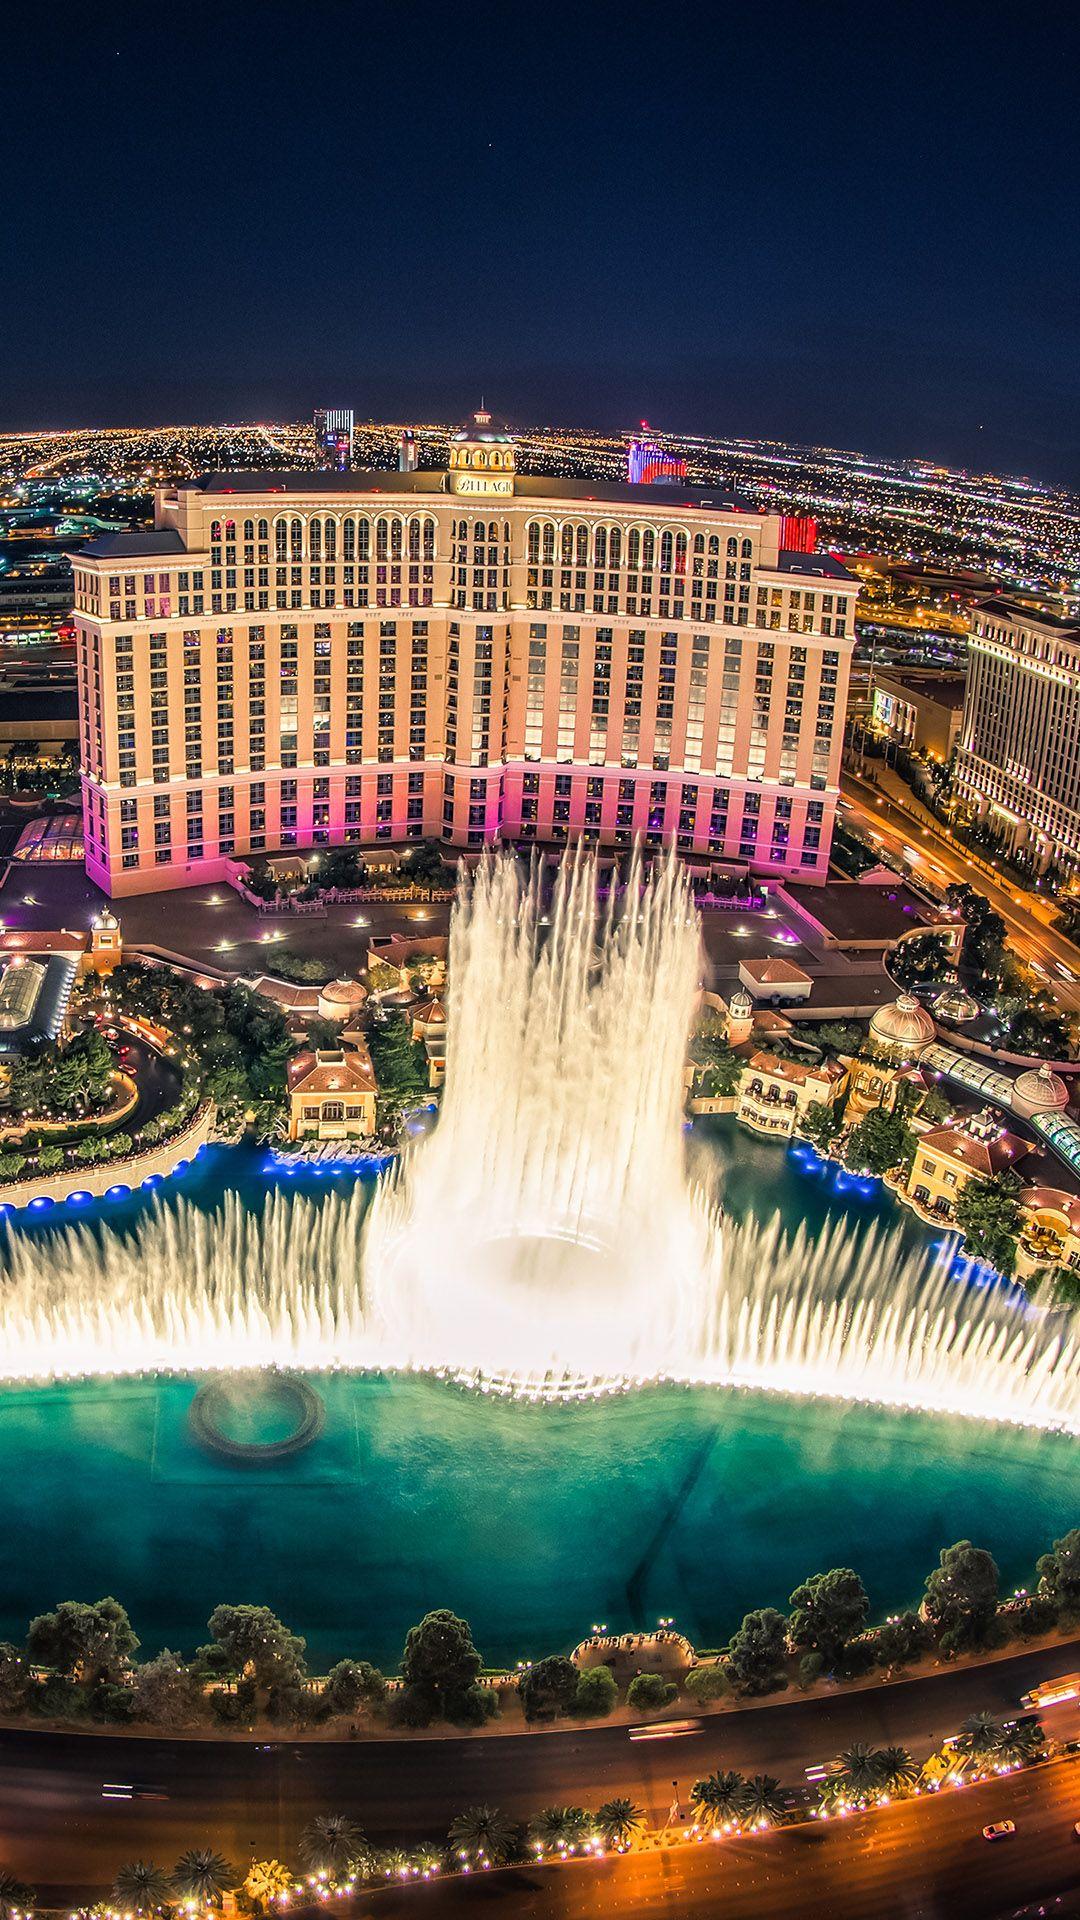 Bellagio Hotel Las Vegas Fountain Show 4K View Wallpapers